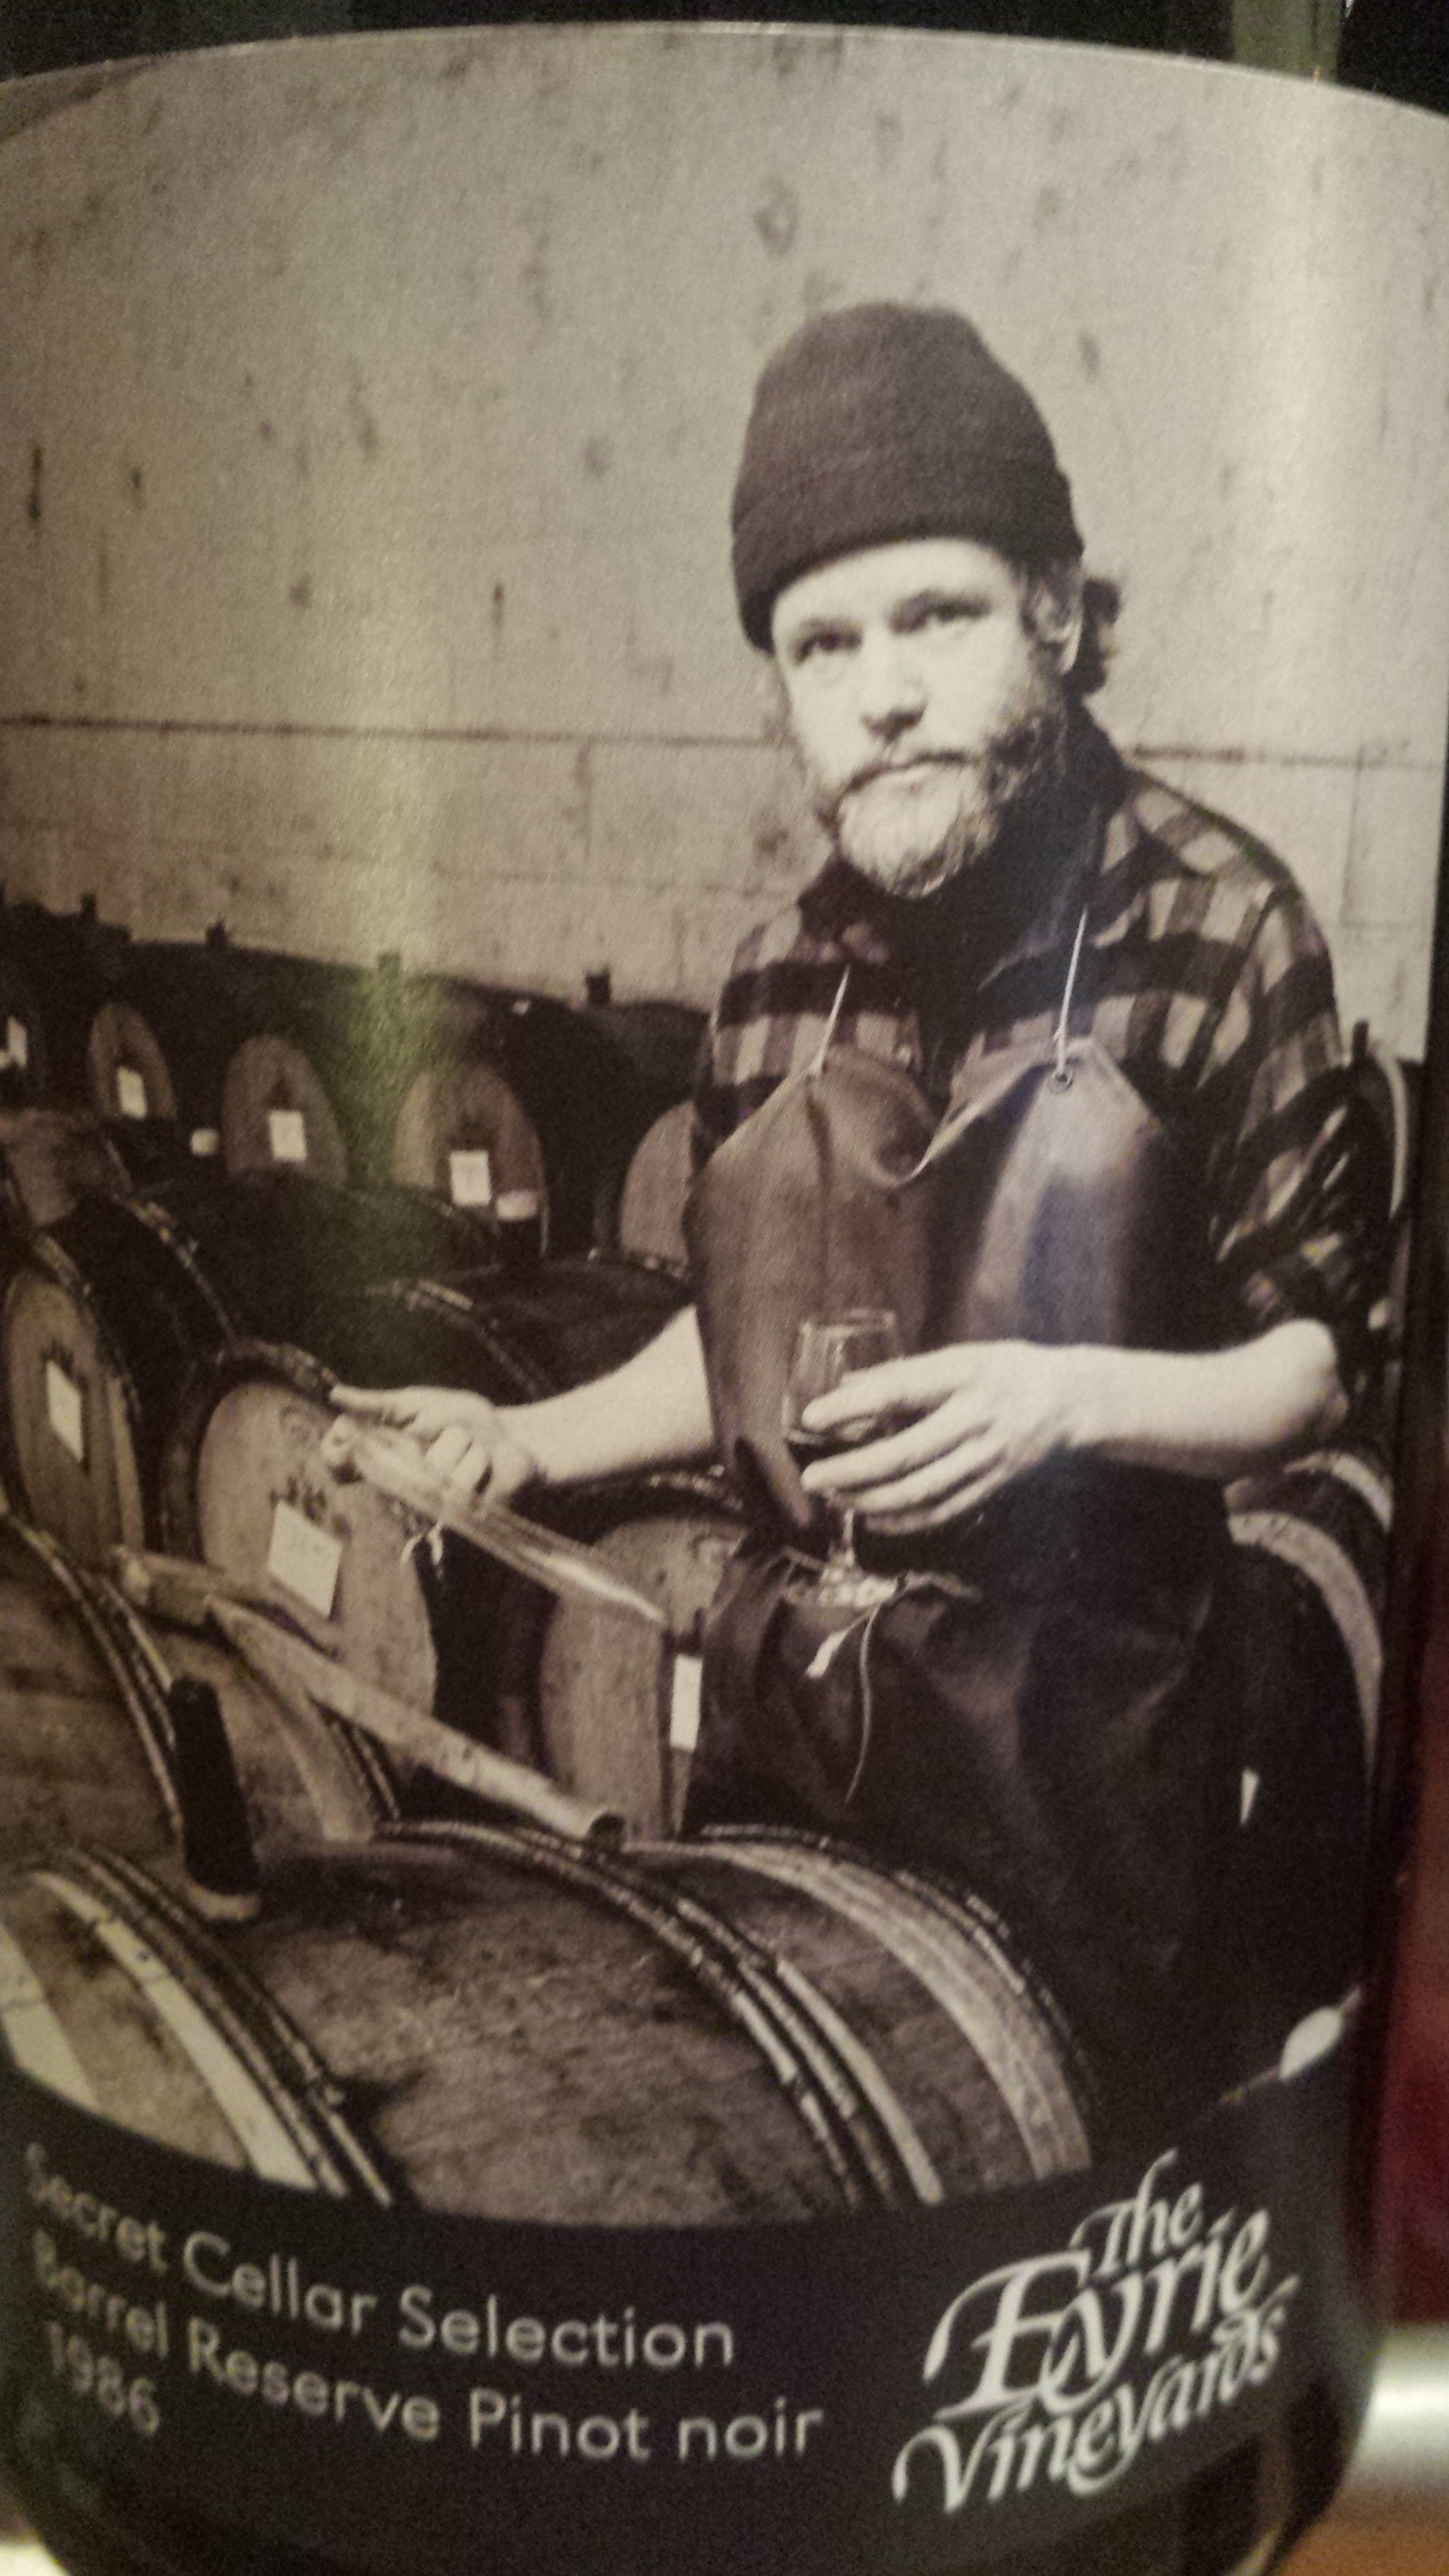 The Eyrie Vineyards – Secret Cellar Selection – Barrel Reserve Pinot Noir 1986 – Willamette Valley